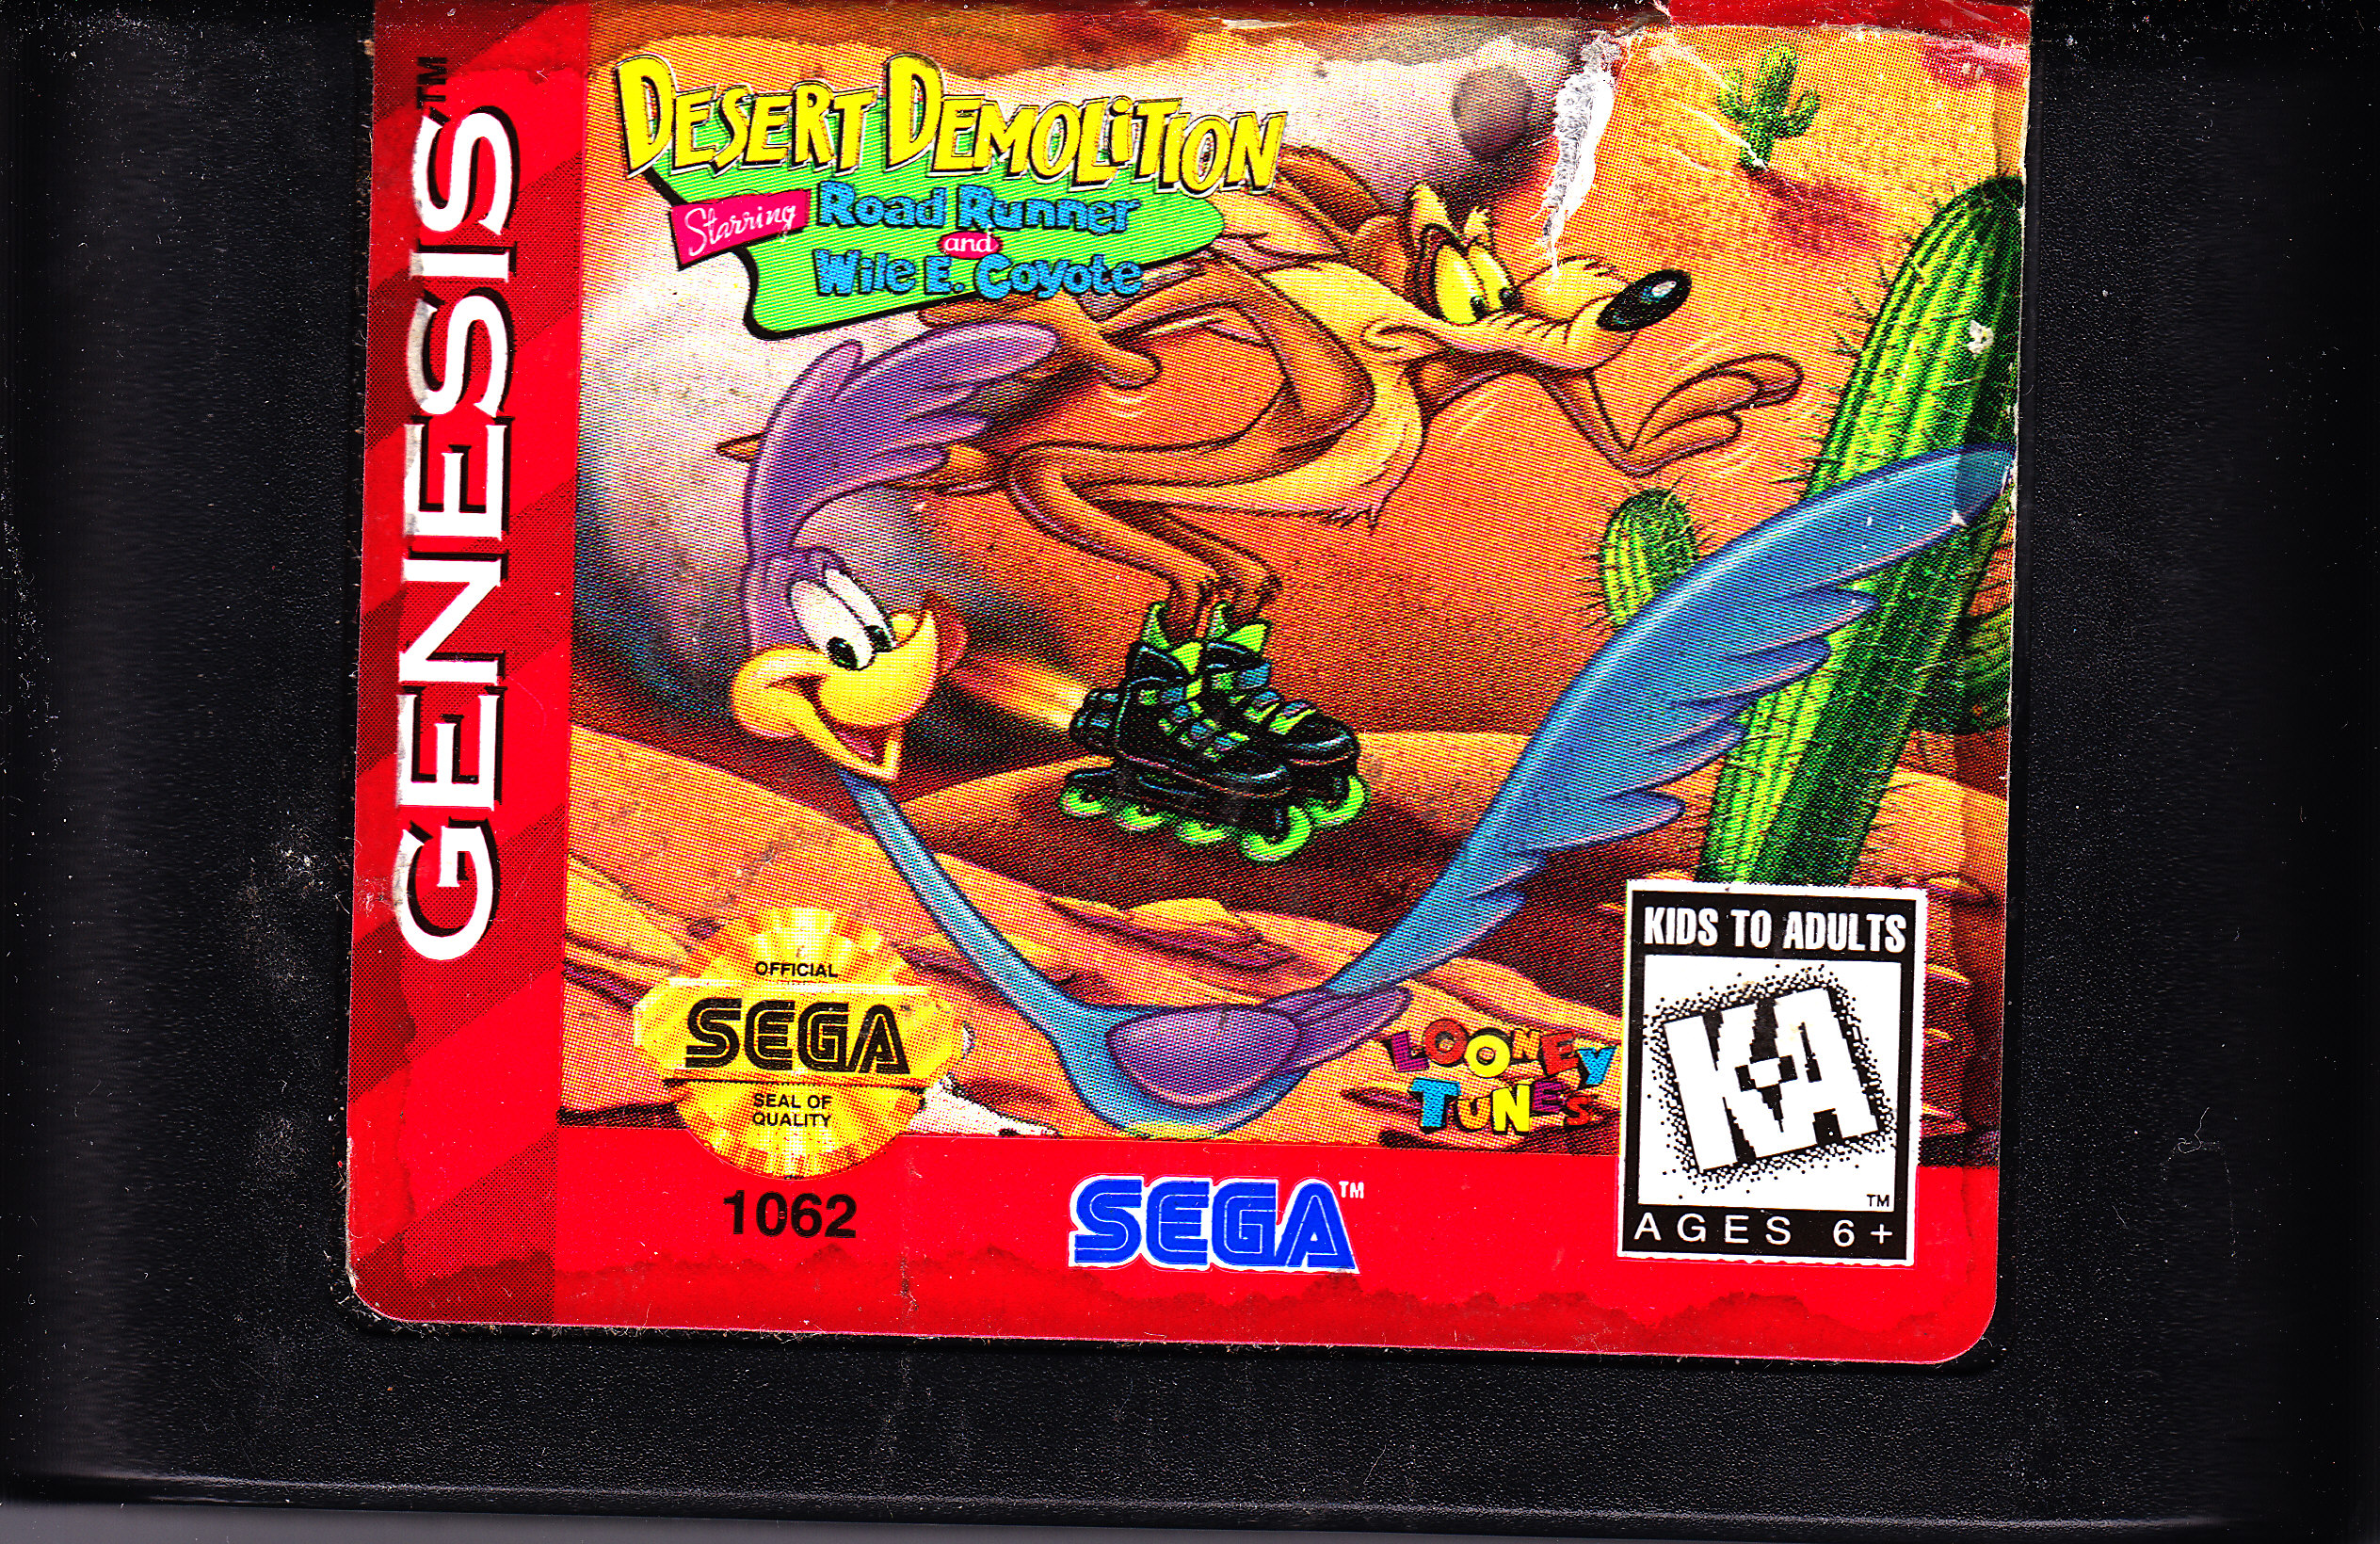 Sega игры купить. Desert Strike Sega оригинал картридж. Sega Mega Drive картриджи. Картридж Sega 15 in 1 Mega Drive. Оригинальные картриджи Sega Mega Drive 2.